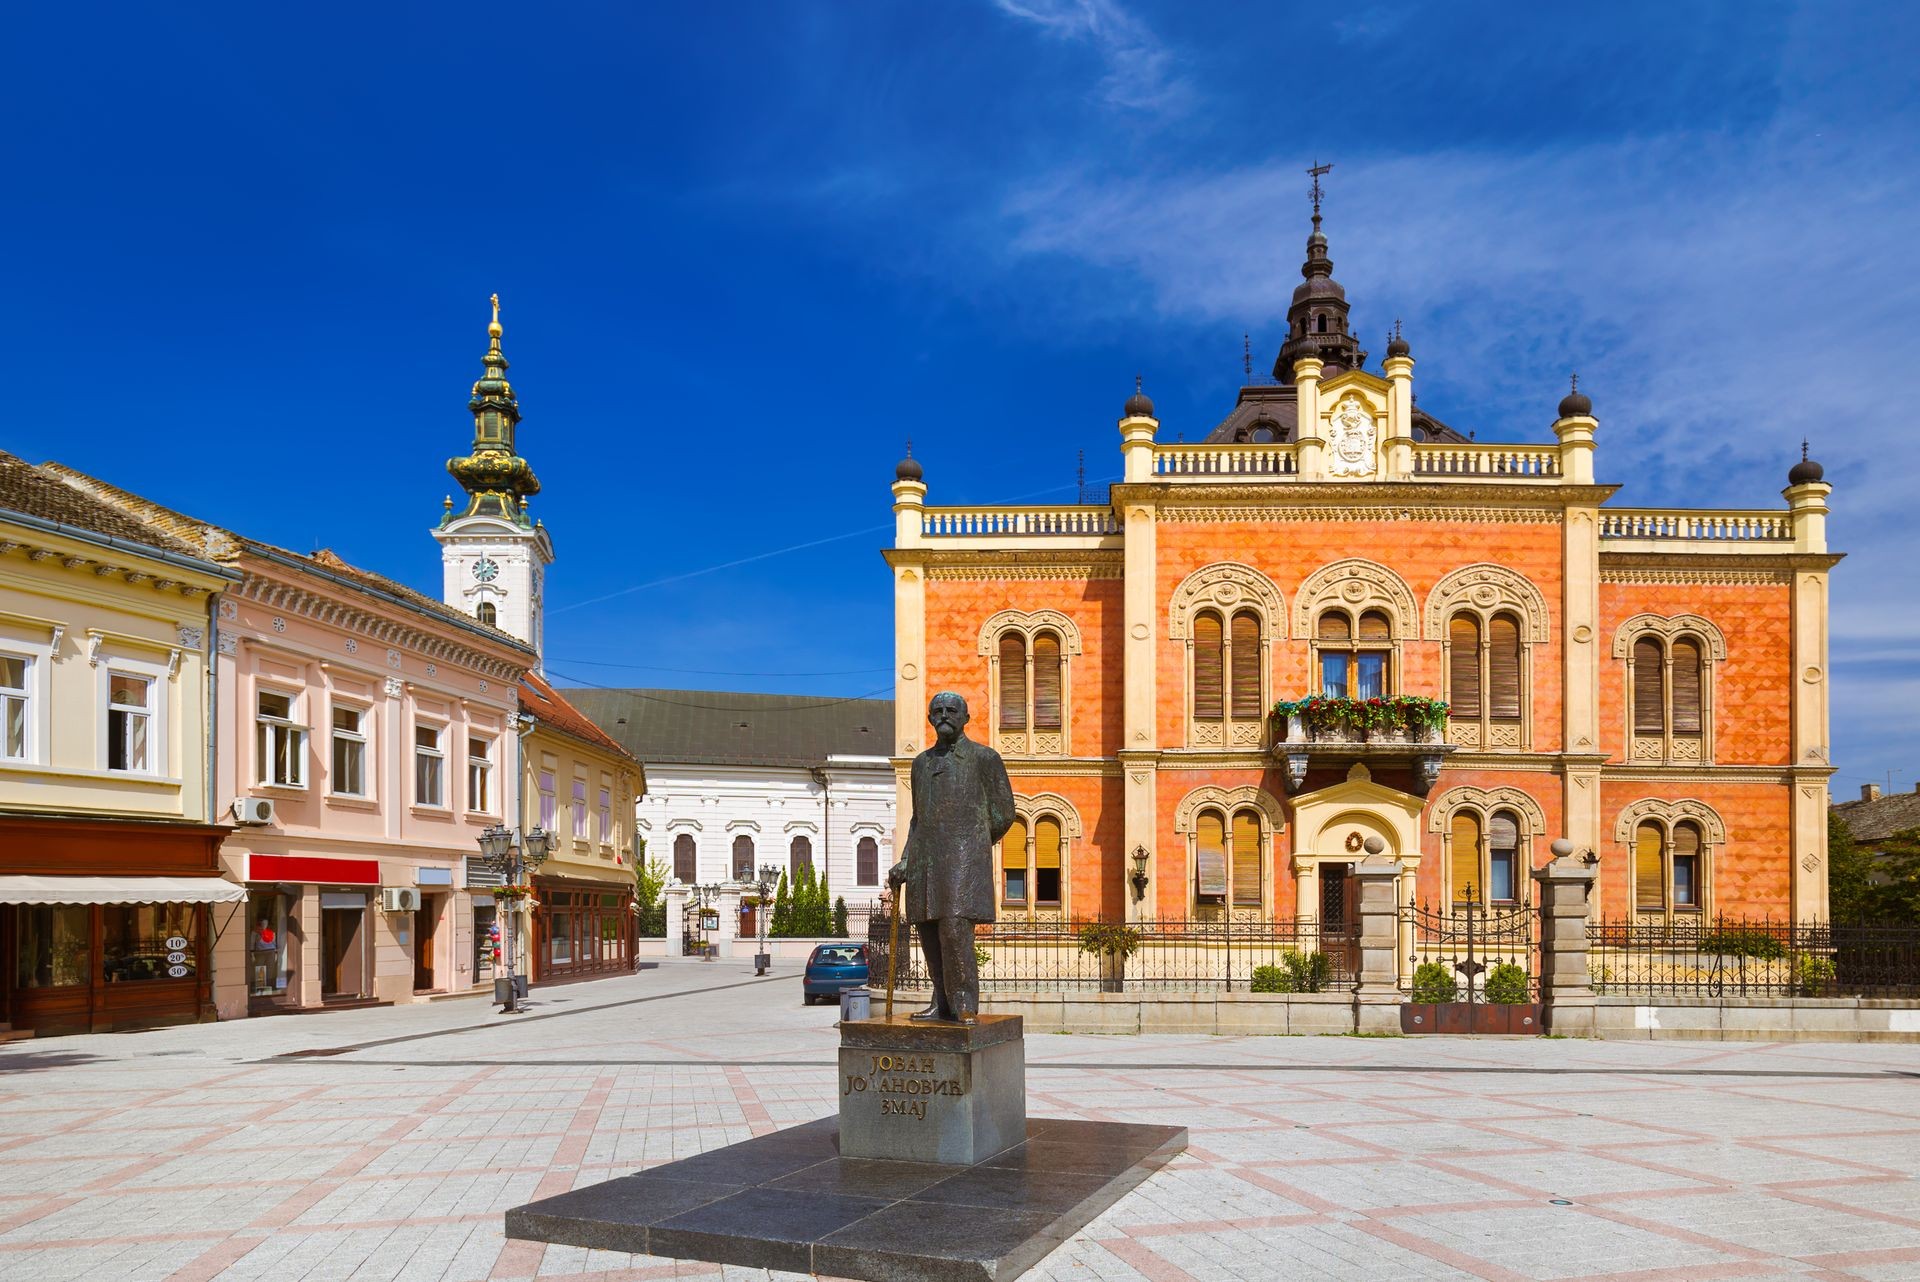 Old town in Novi Sad - Serbia - architecture travel background